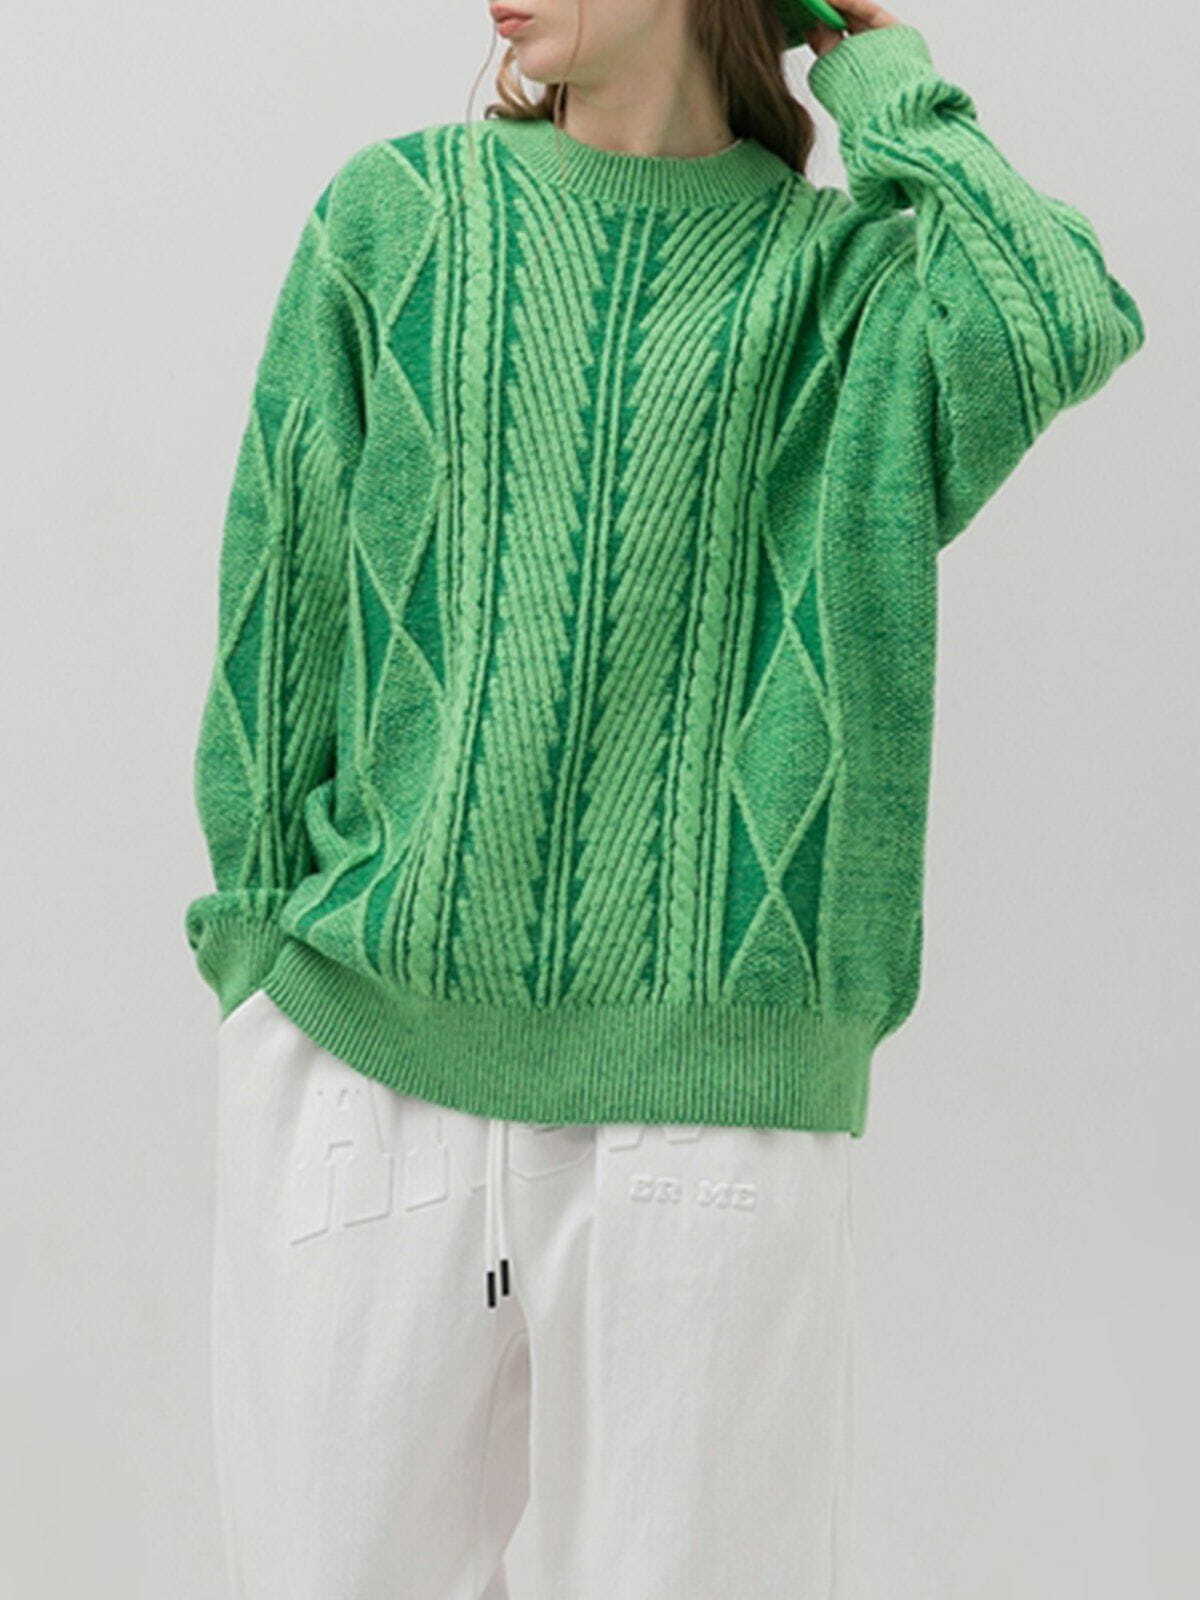 knit rhombus sweater retro & edgy urban fashion 5692